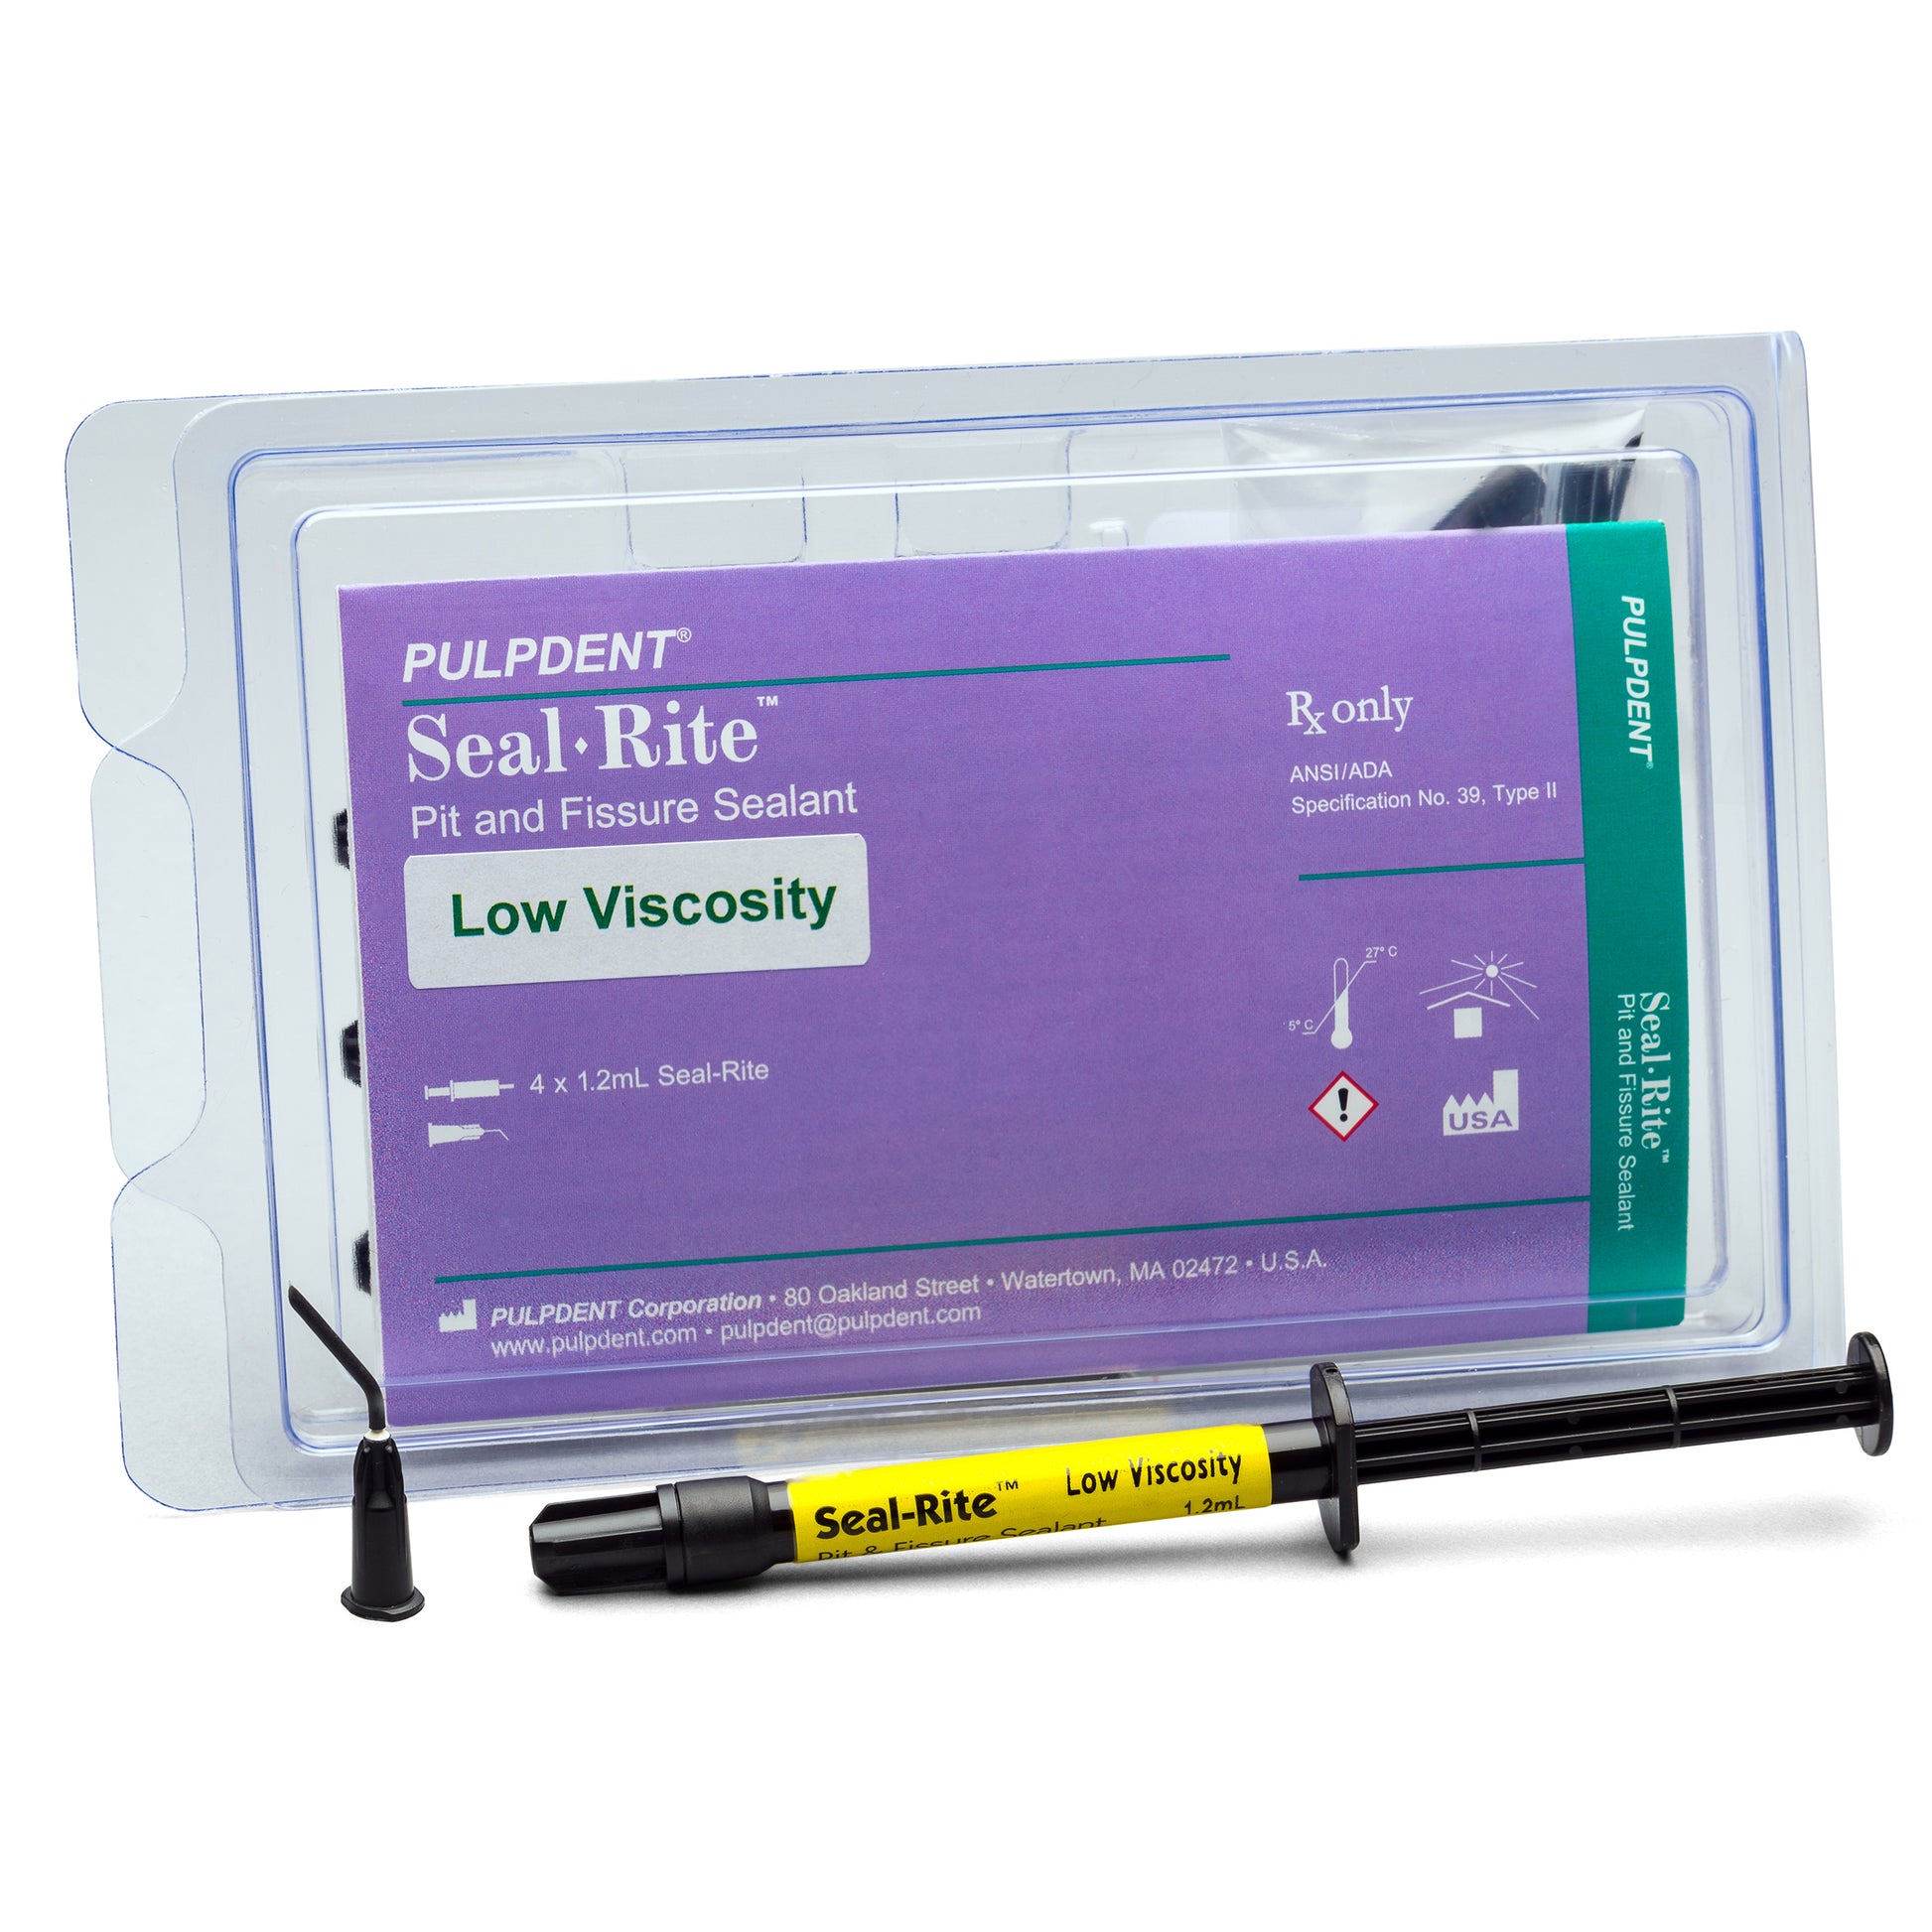 Seal-Rite Low Viscosity, 7.7% Filled, KIT: 4 x 1.2 mL syringes + 8 applicator tips, off-white